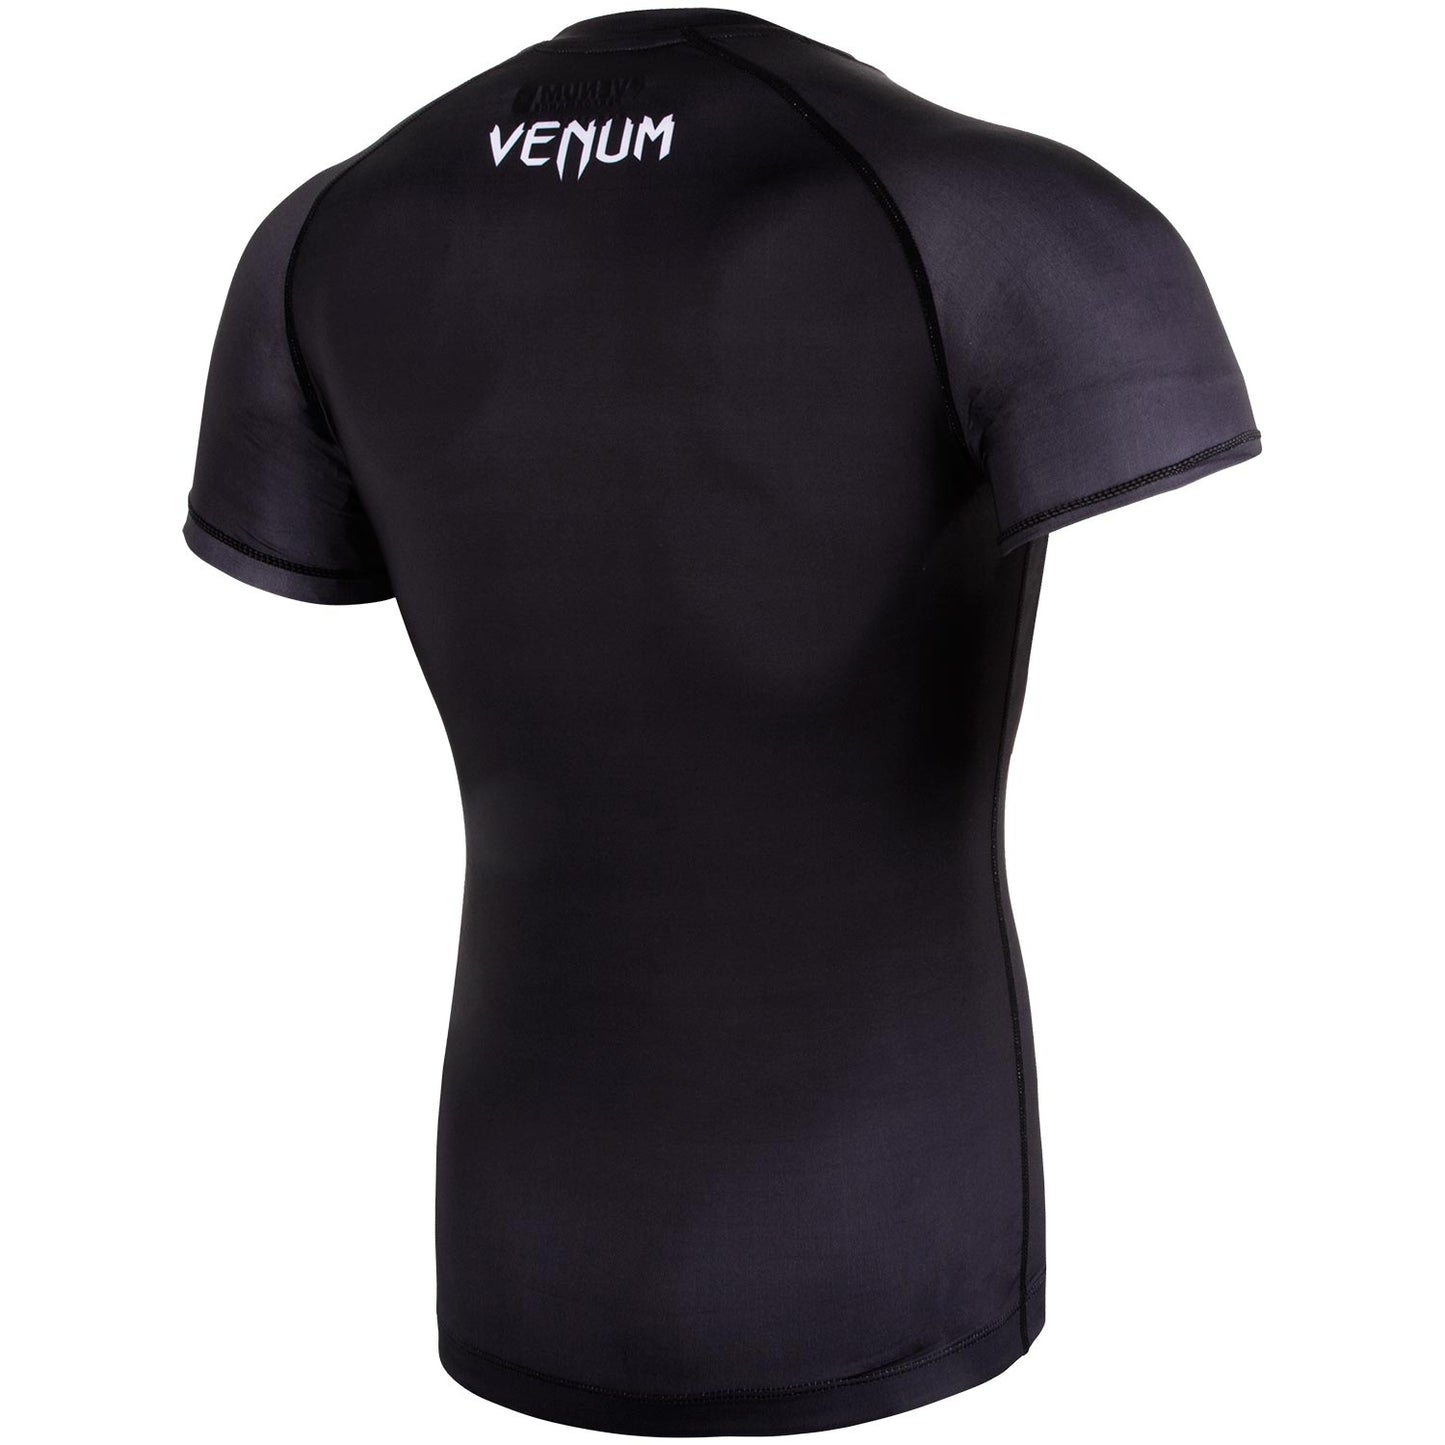 Venum Contender 3.0 Compression T-shirt - Short Sleeves - Black/White